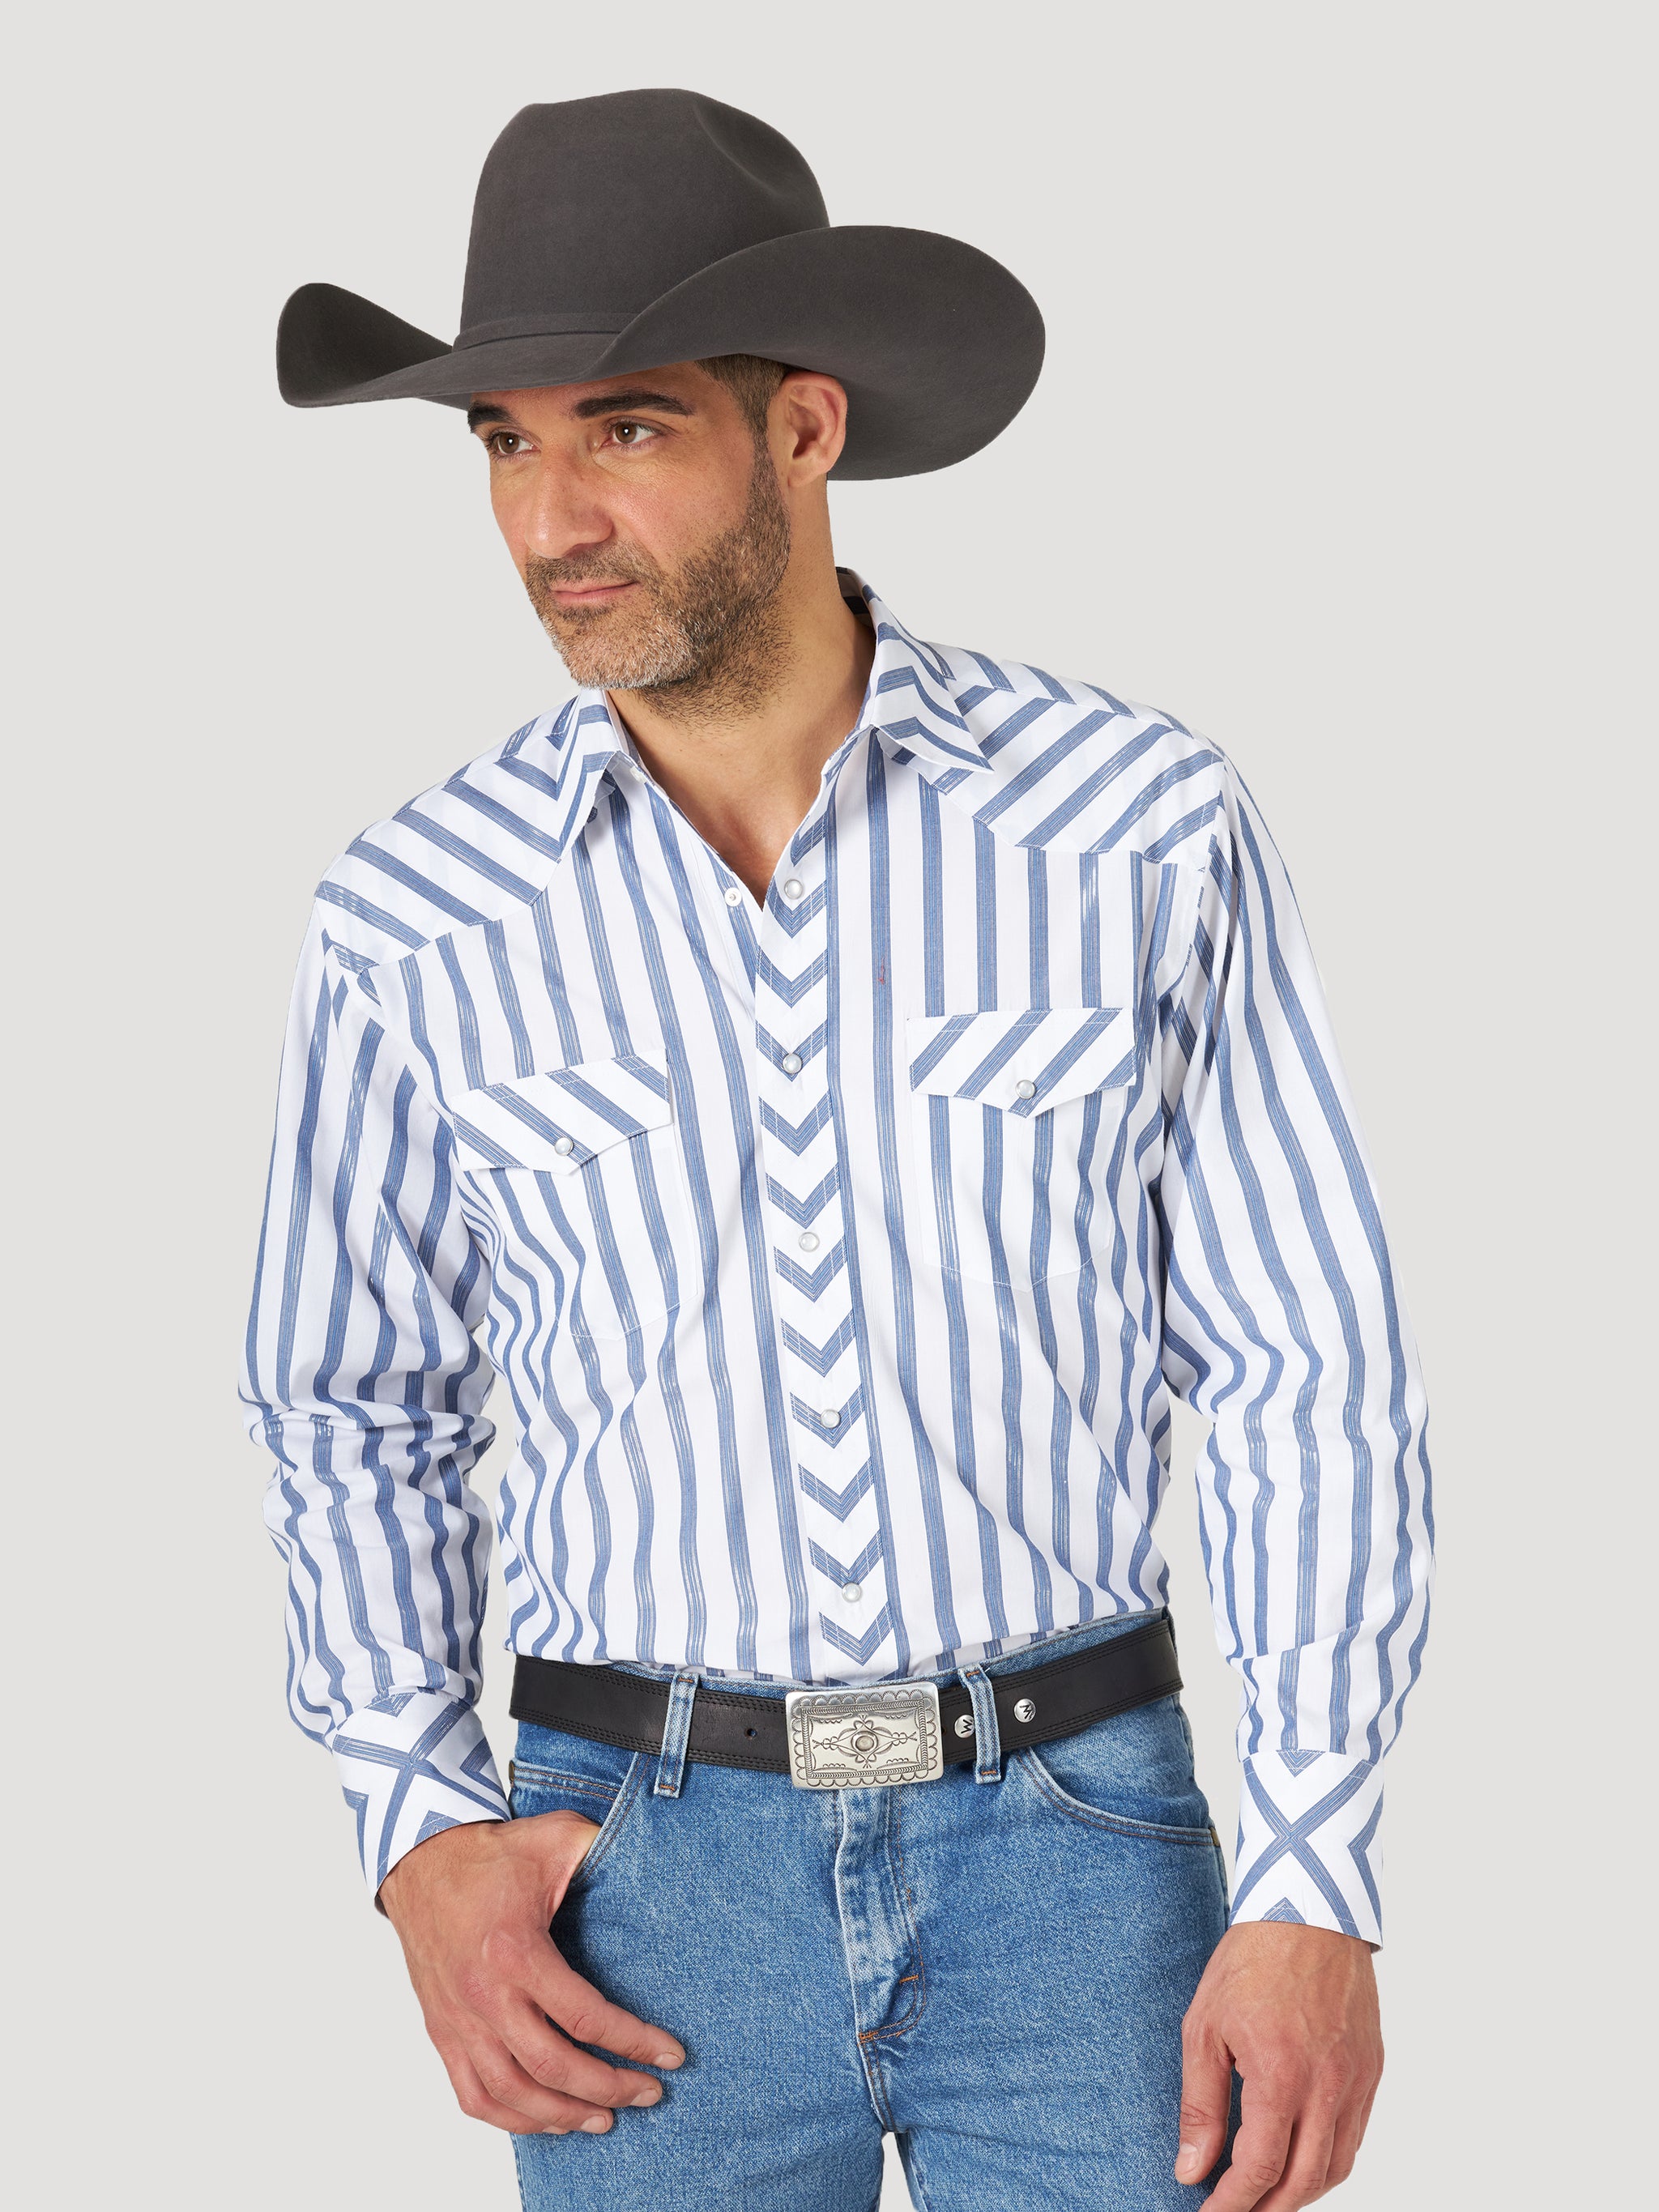 Wrangler Sport Western Snap Long-Sleeve Shirt for Men - Blue - XL